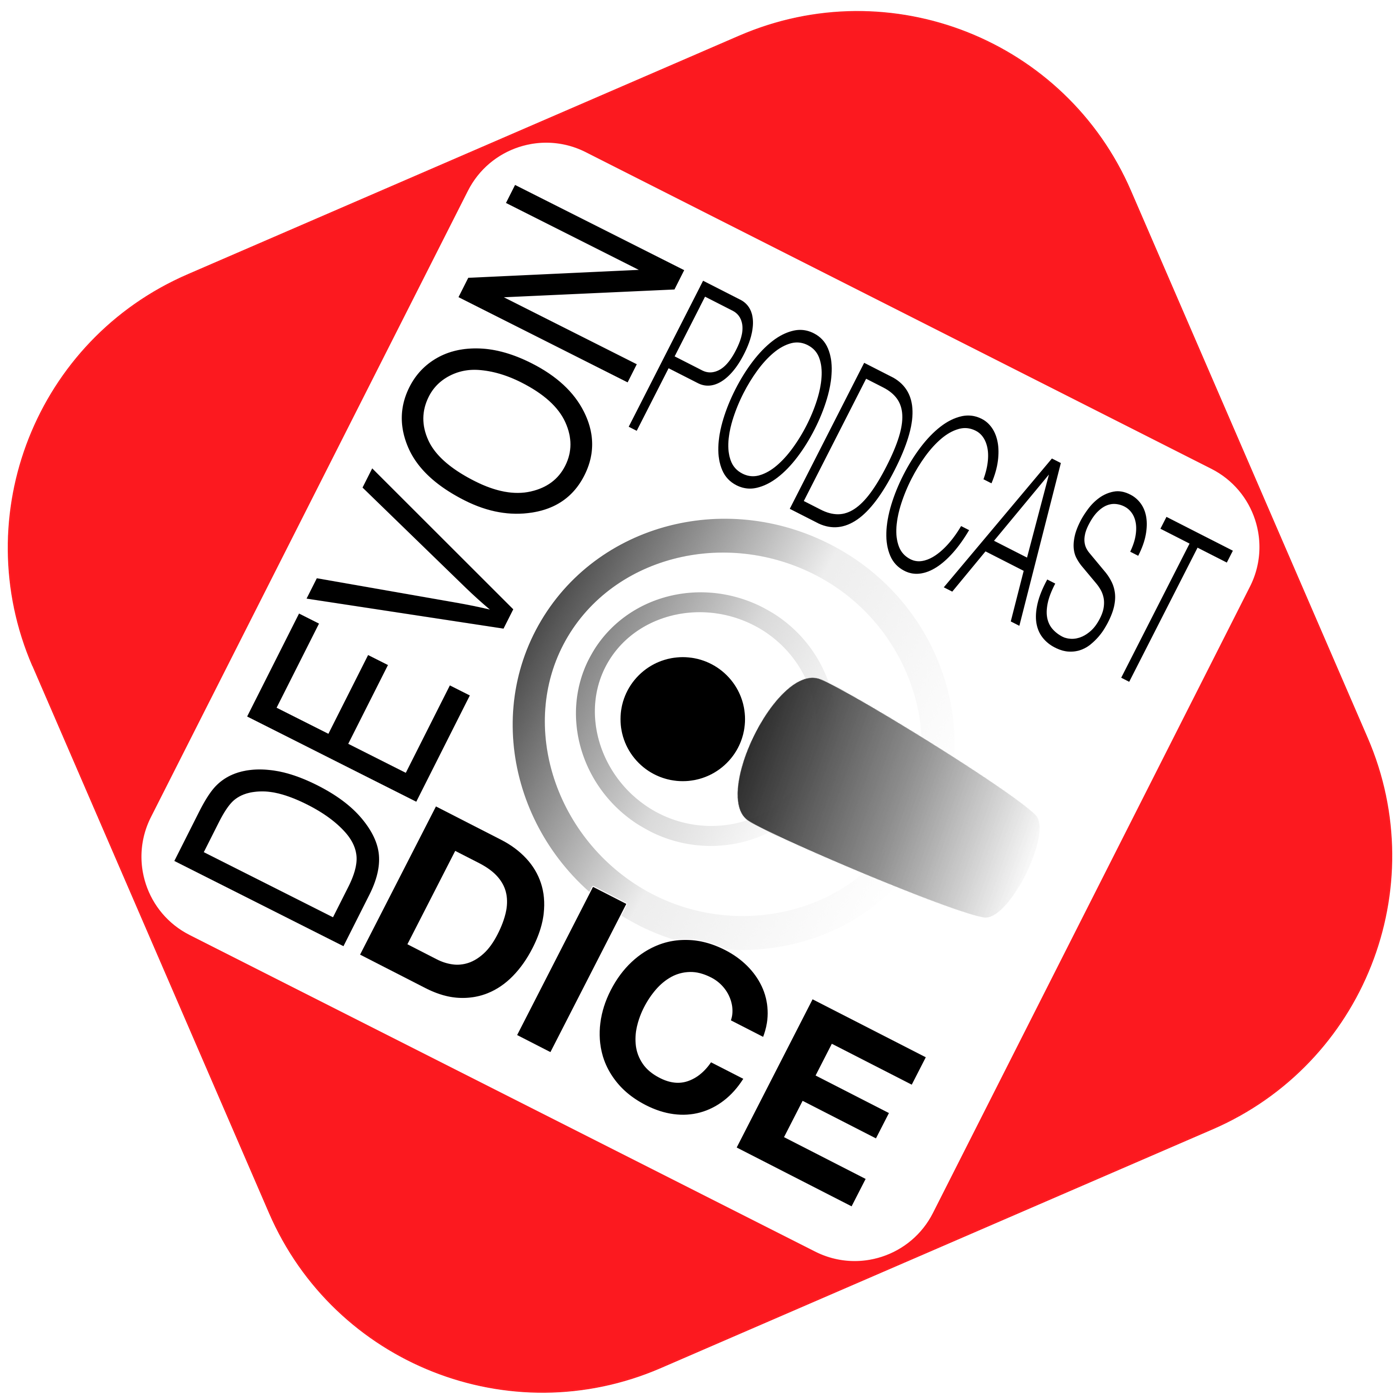 16 Devon Dice Podcast Scythe summer nights